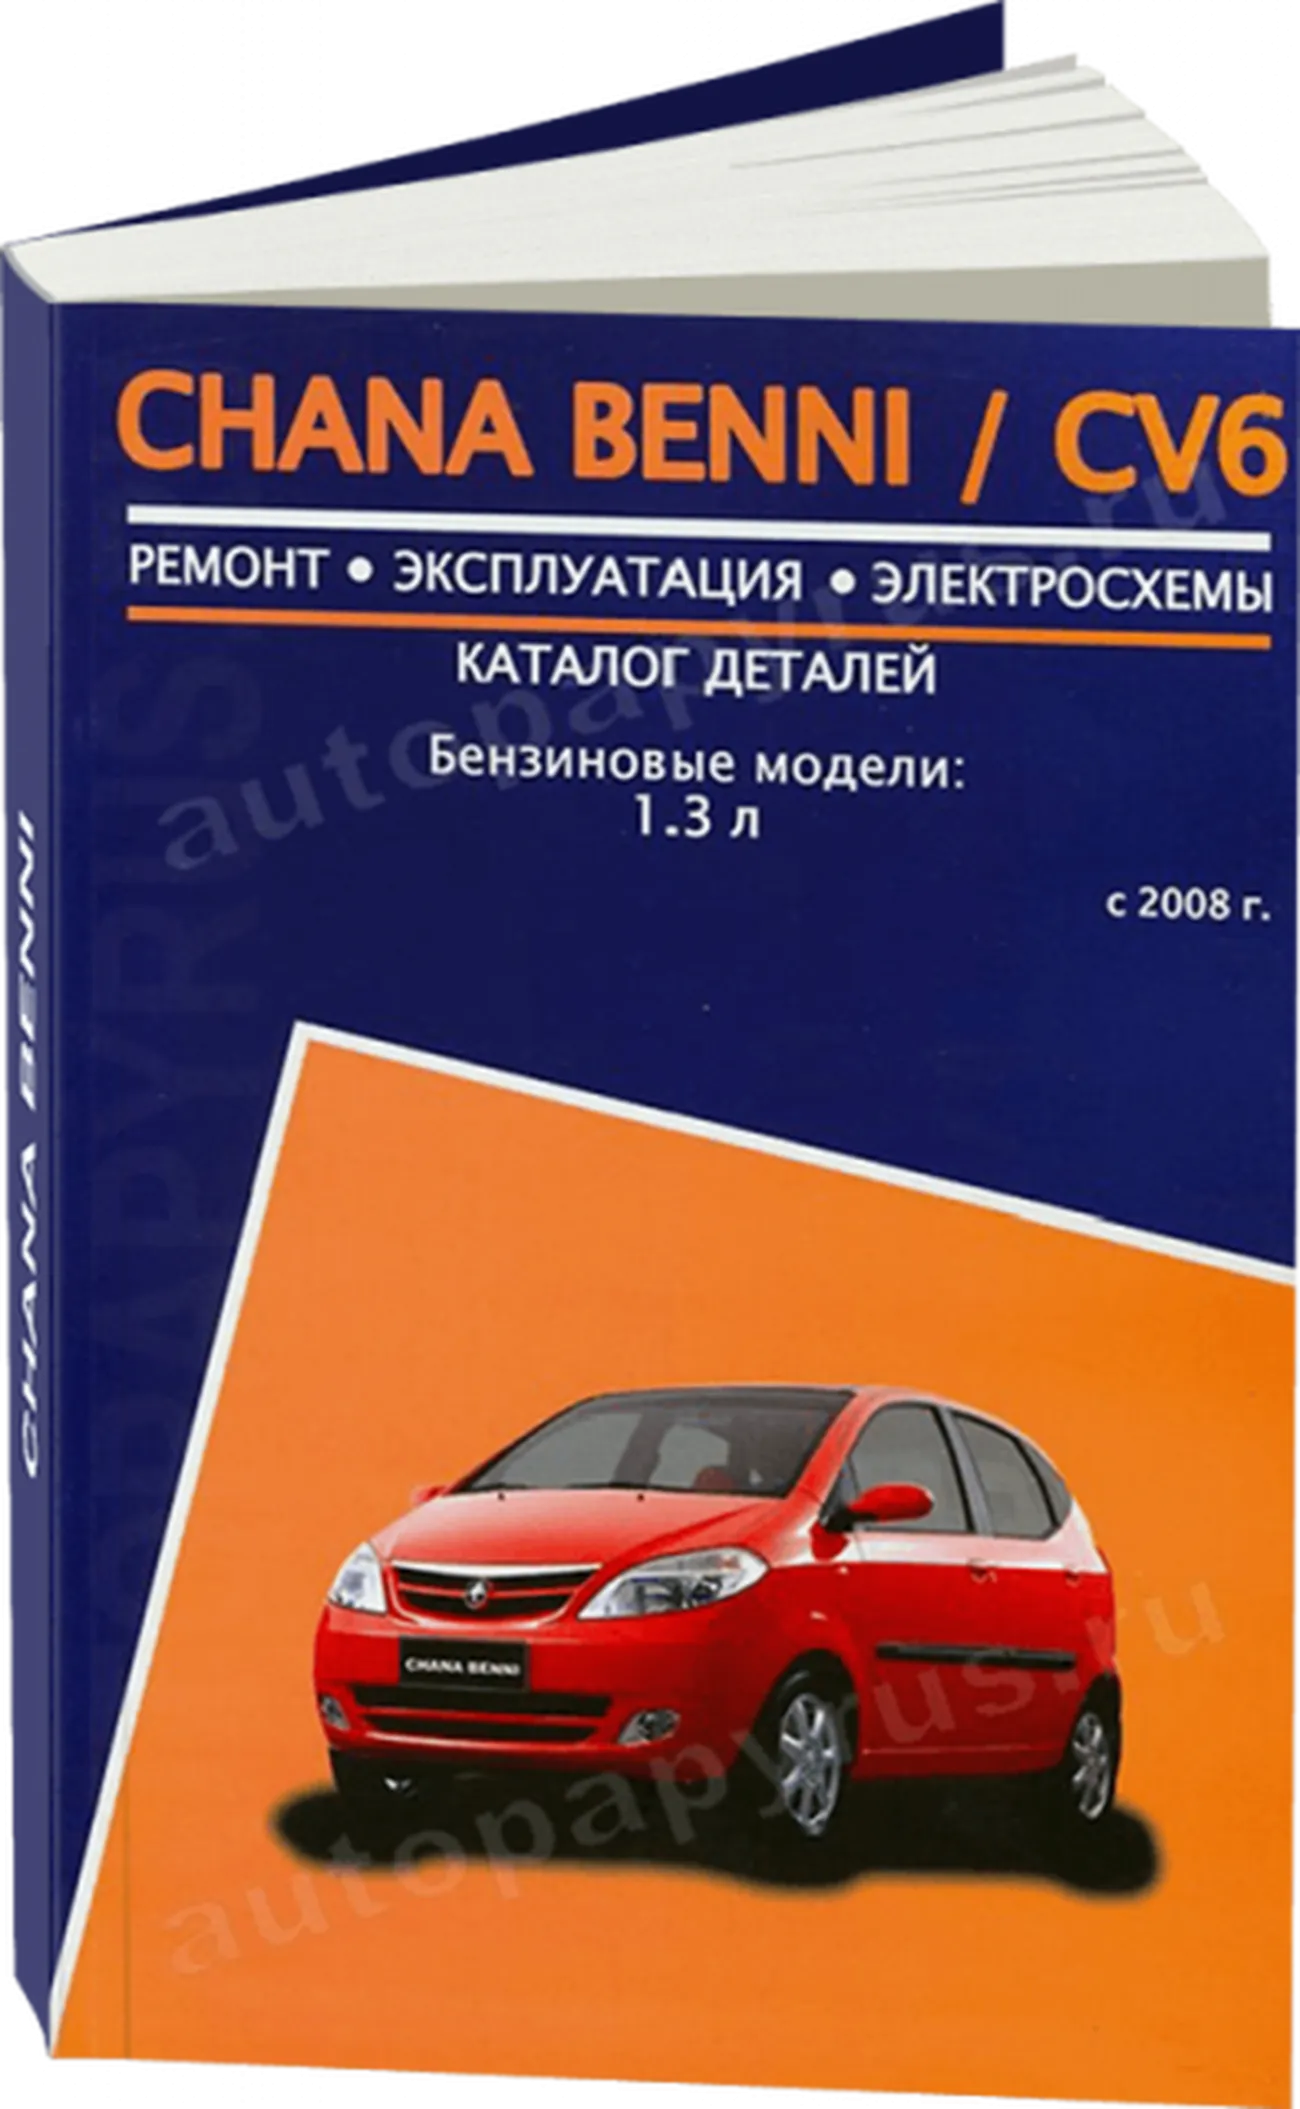 Книга: CHANA BENNI / CV6 (б) с 2008 г.в., рем., экспл., то | Авторесурс